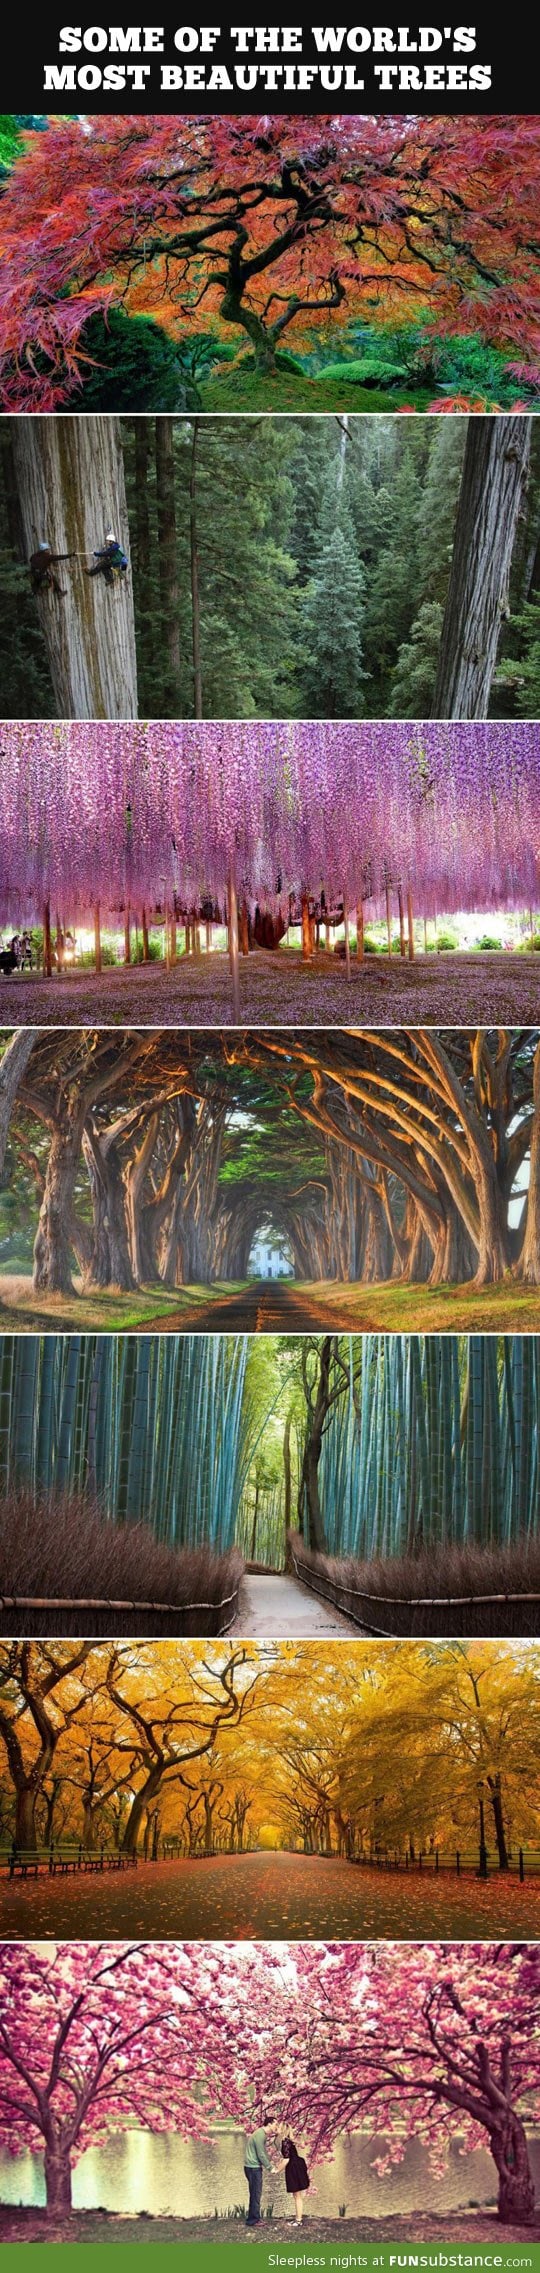 World's most beautiful trees